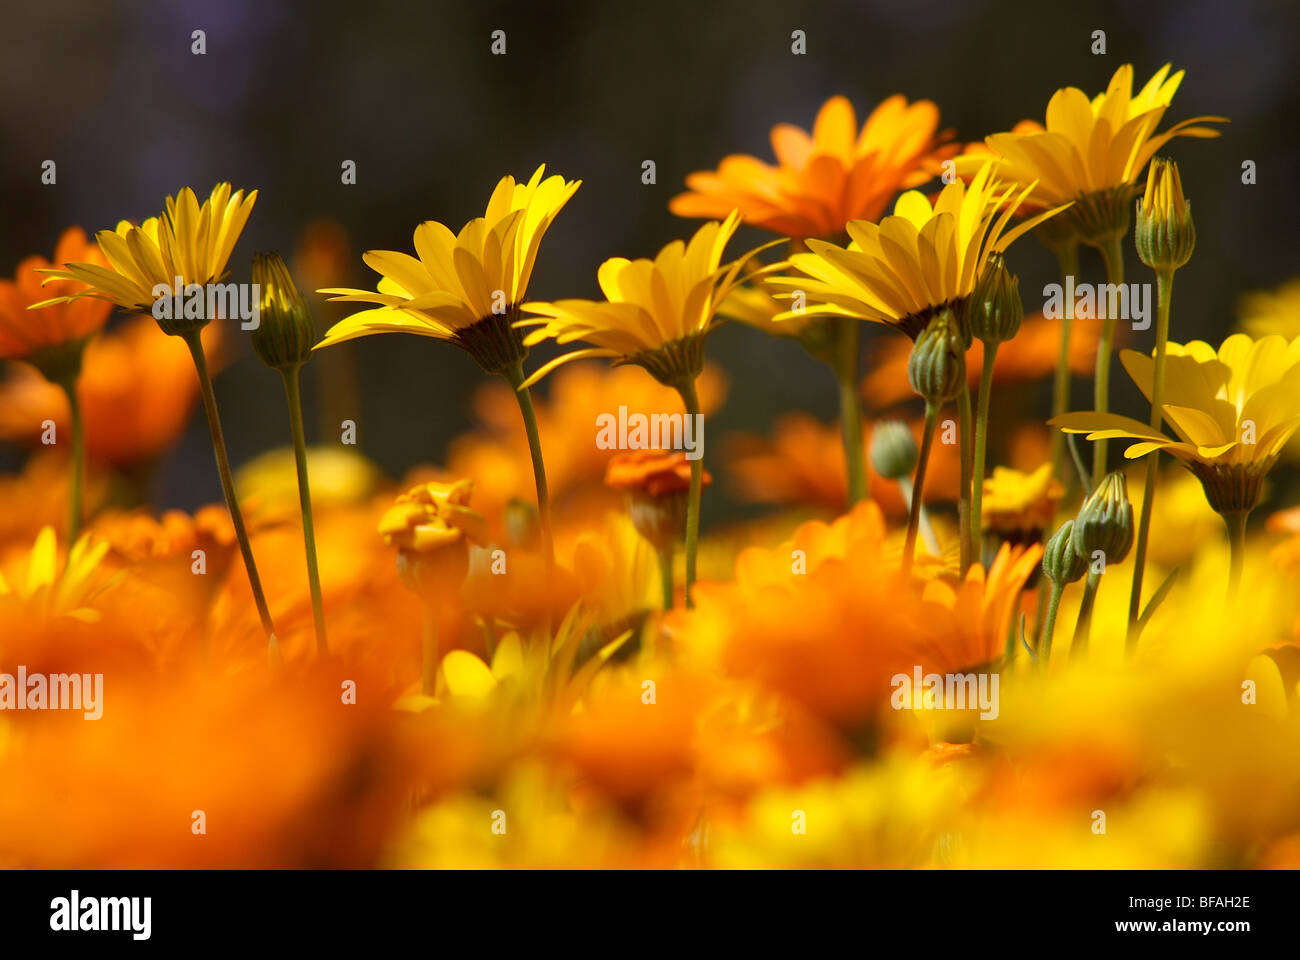 Namaqualand Daisy, Dimorphotheca, Sinuata, yellow, orange daisy, daisies Stock Photo